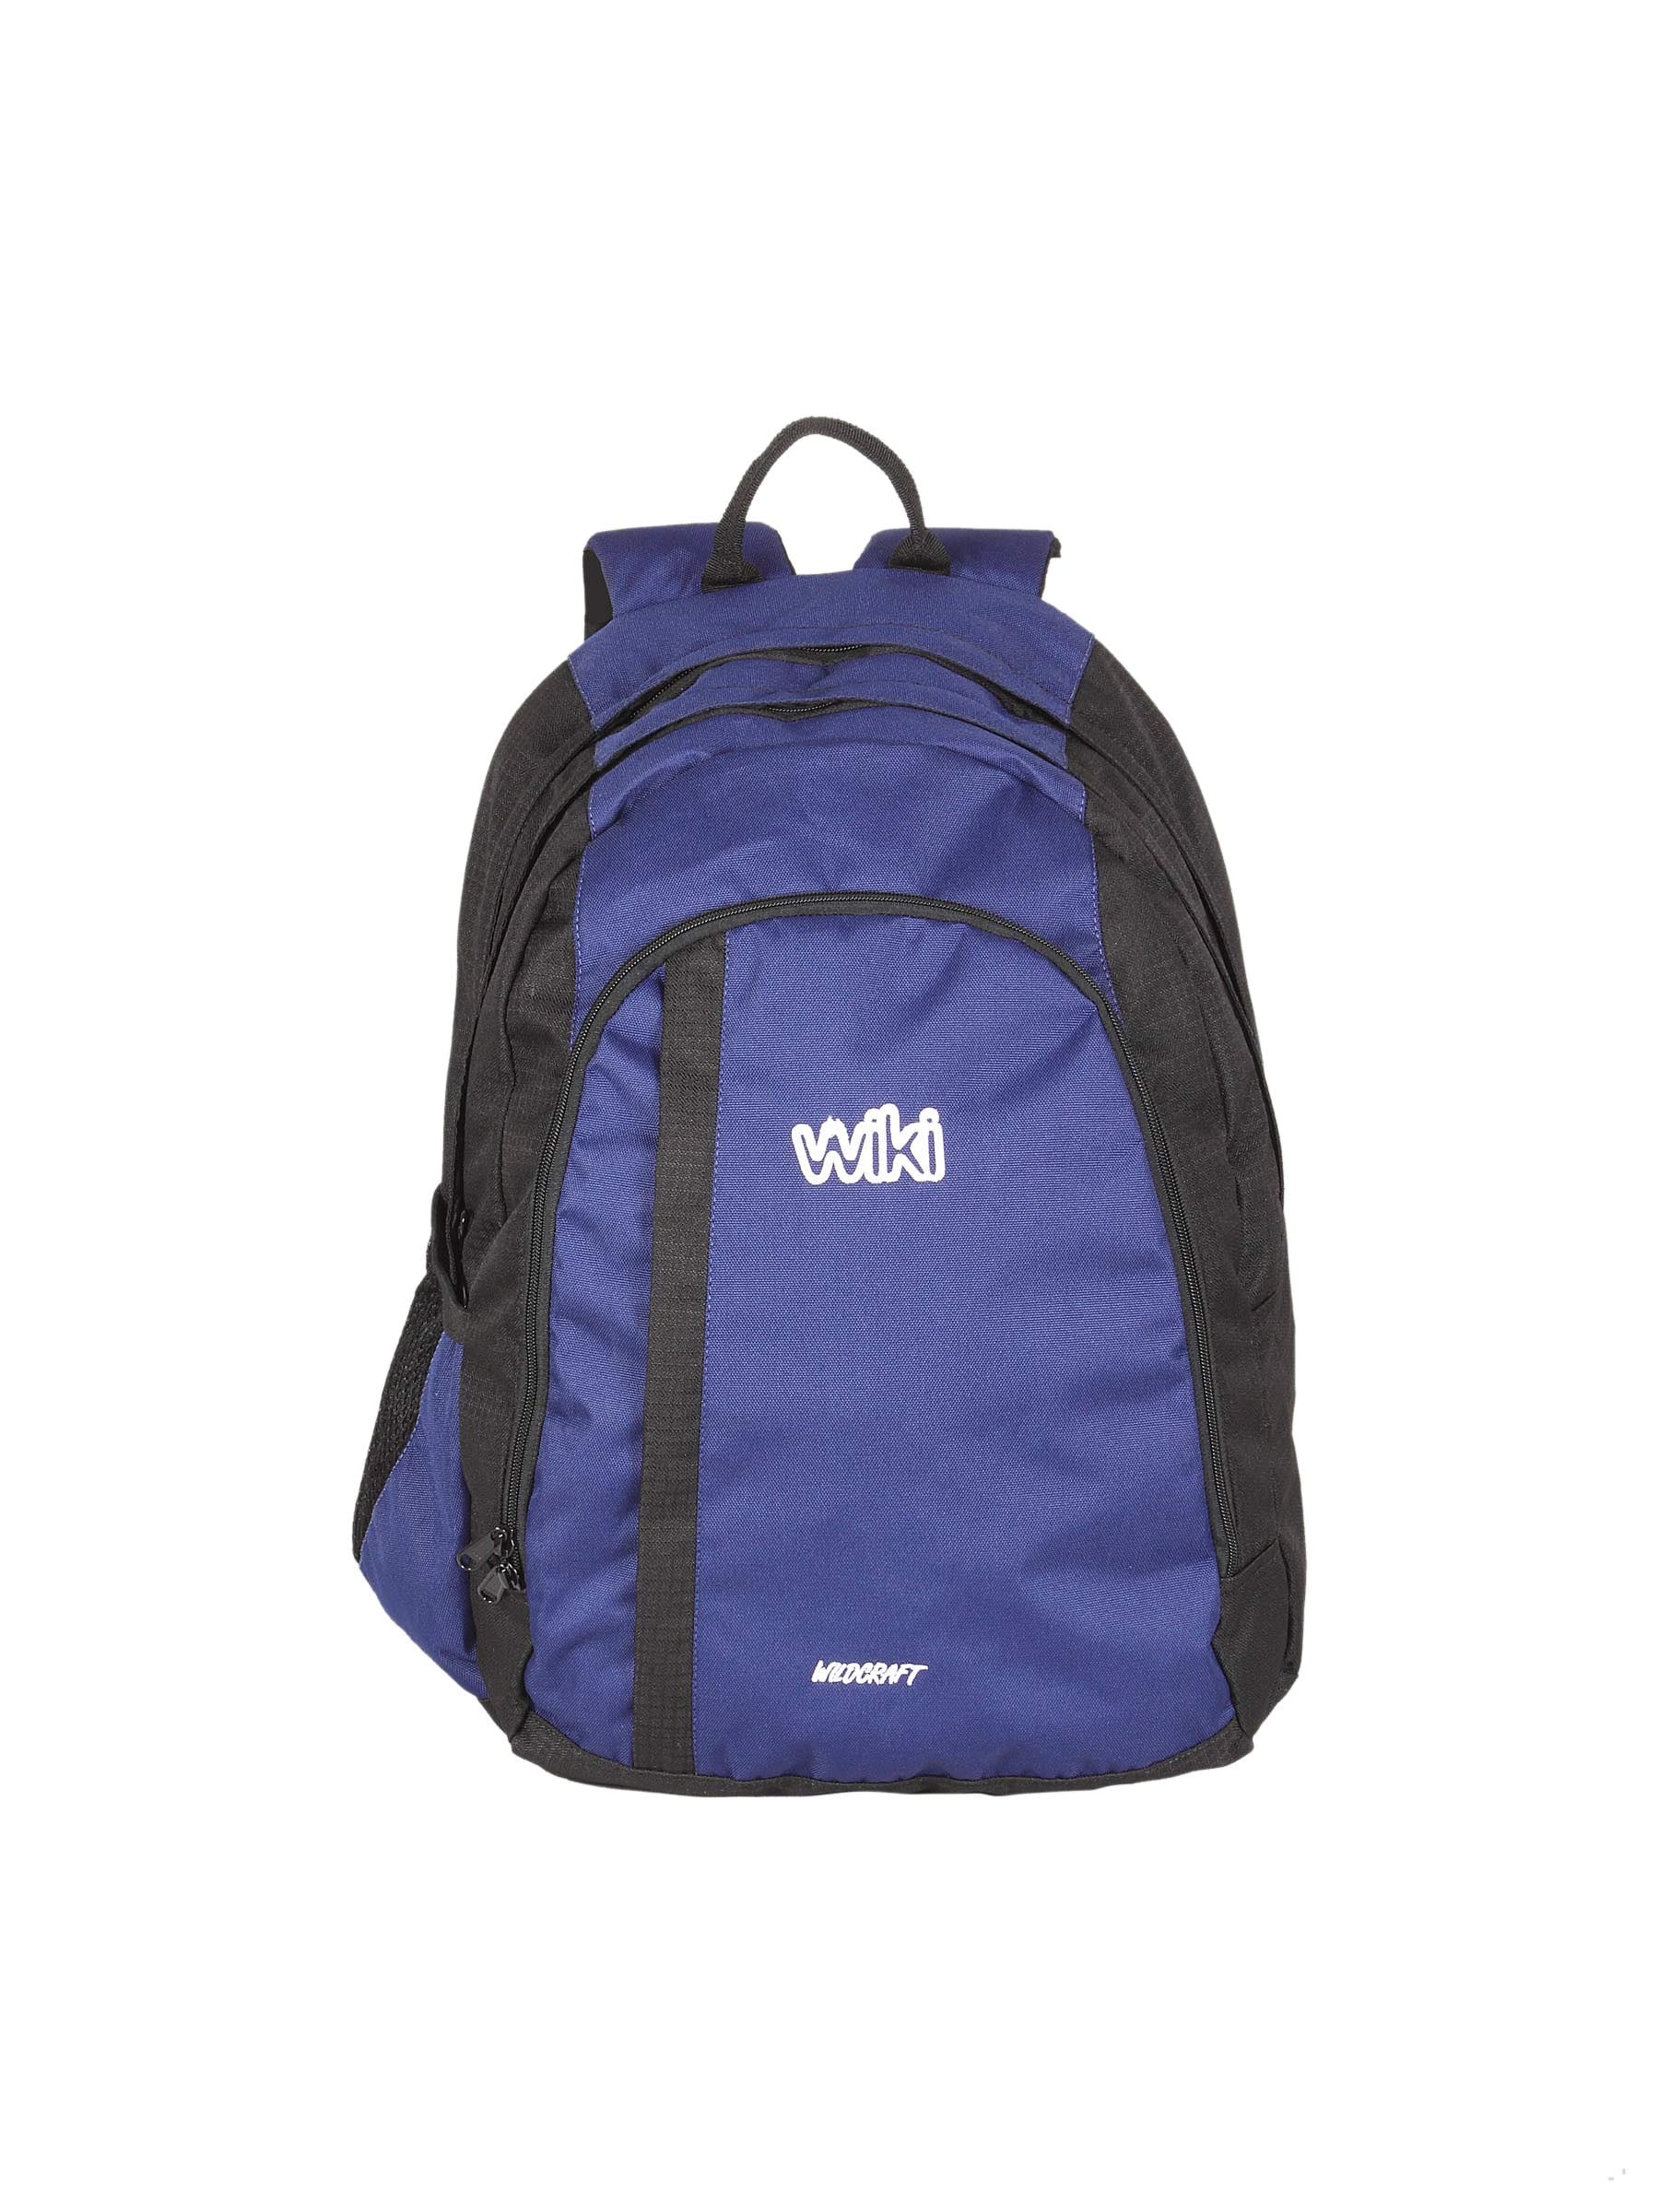 Wildcraft Wiki Unisex Blue Backpack